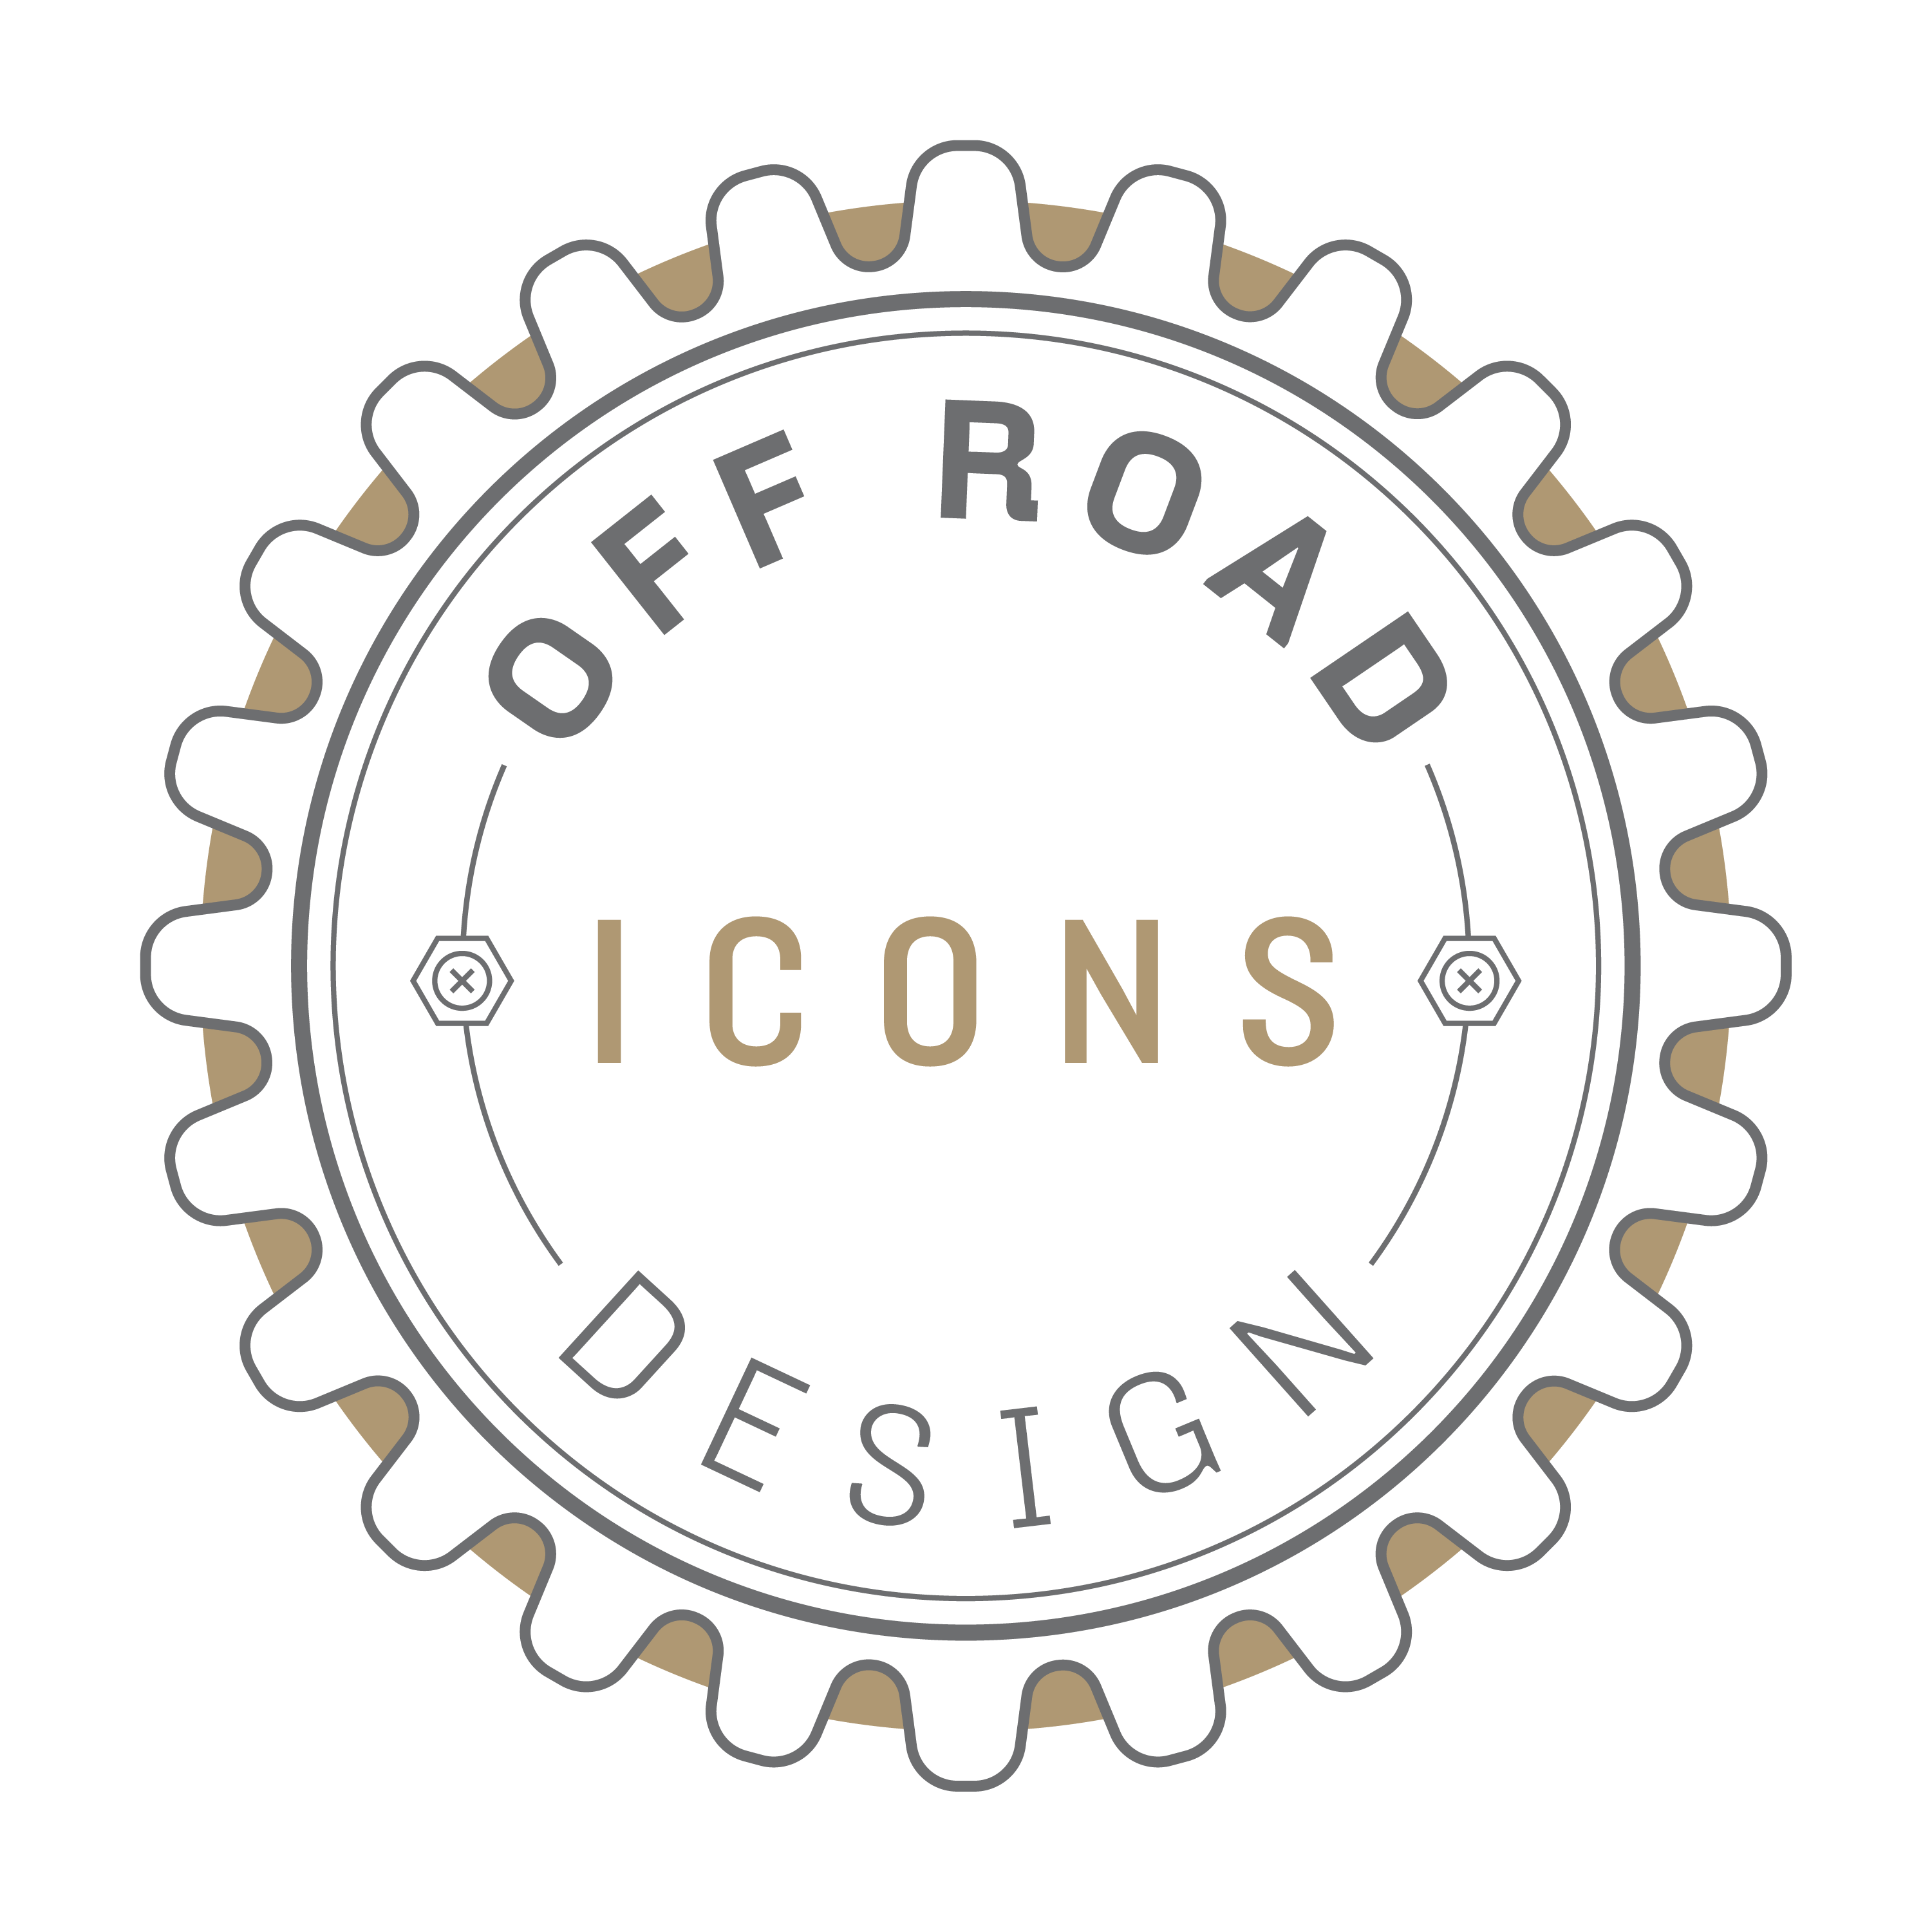 Off Road Icons Design